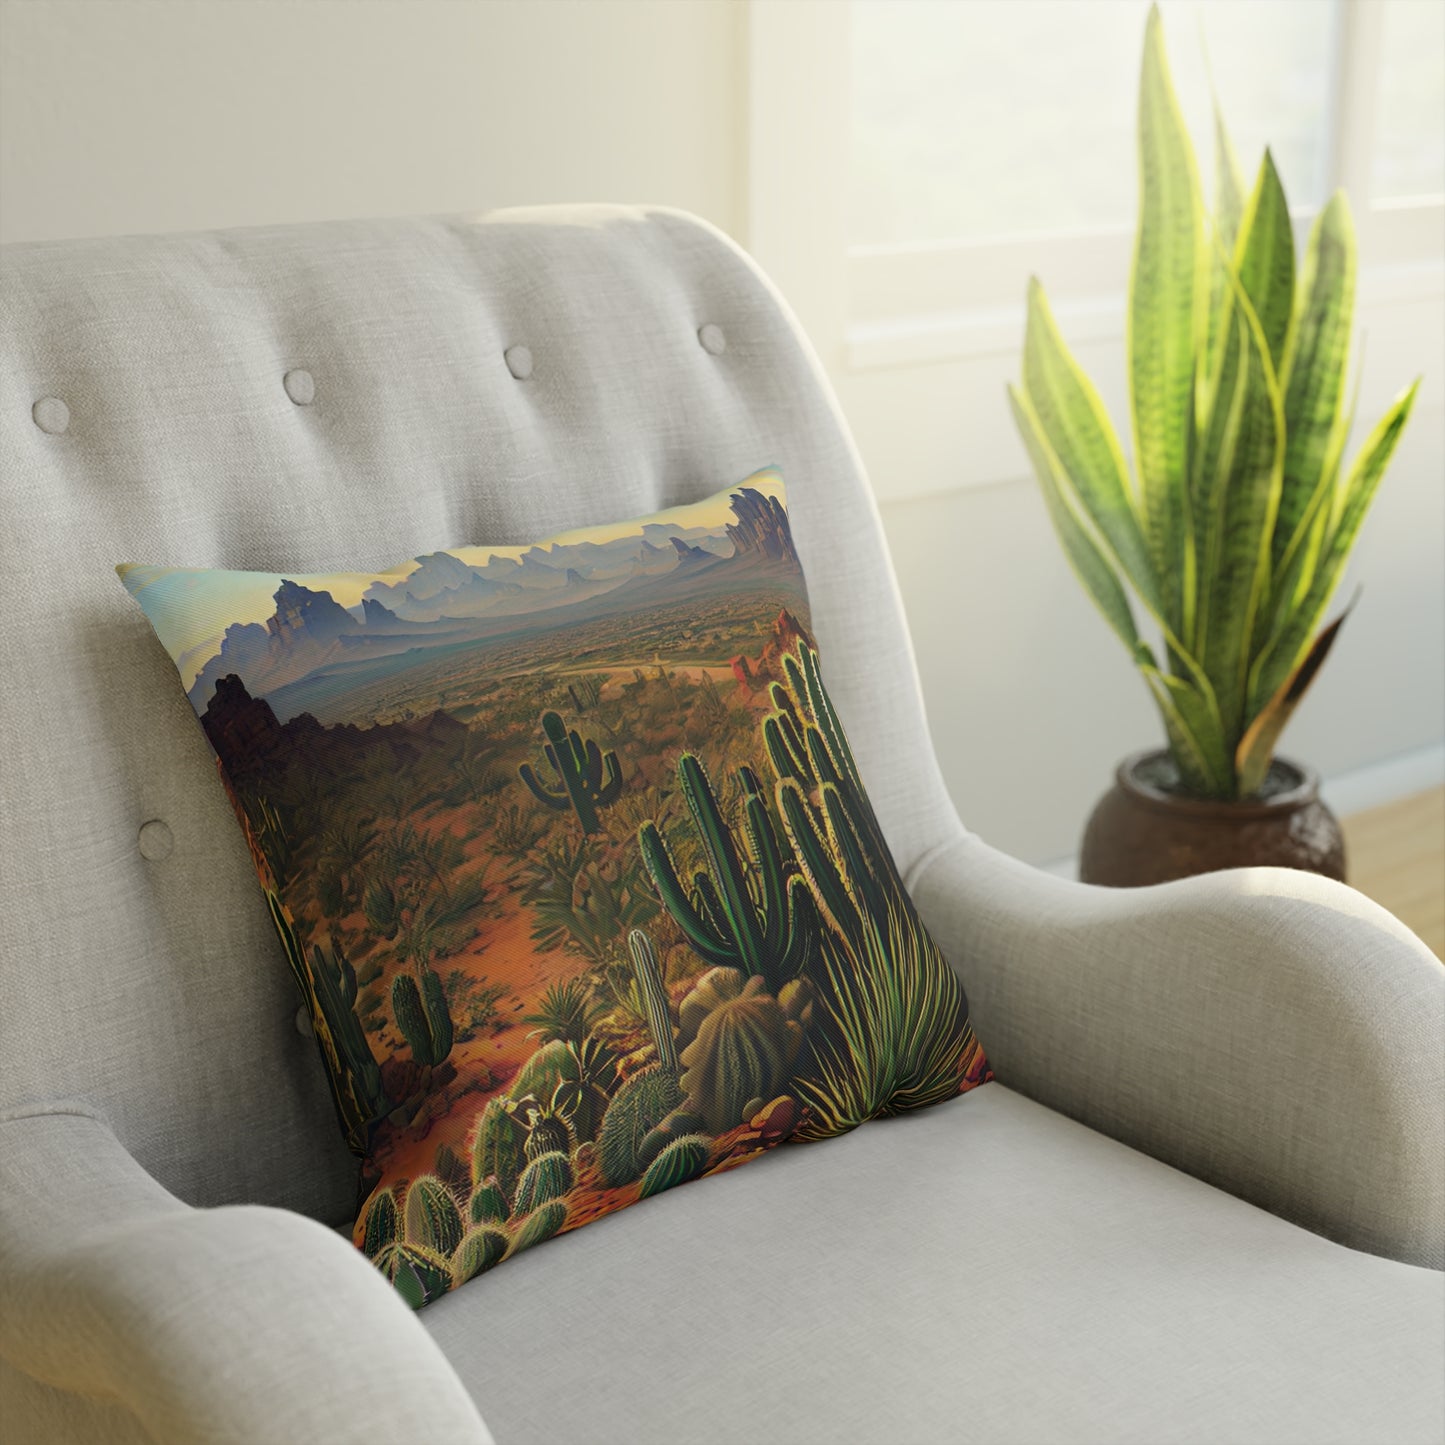 Desert Cactus Retro Vibe Cushion